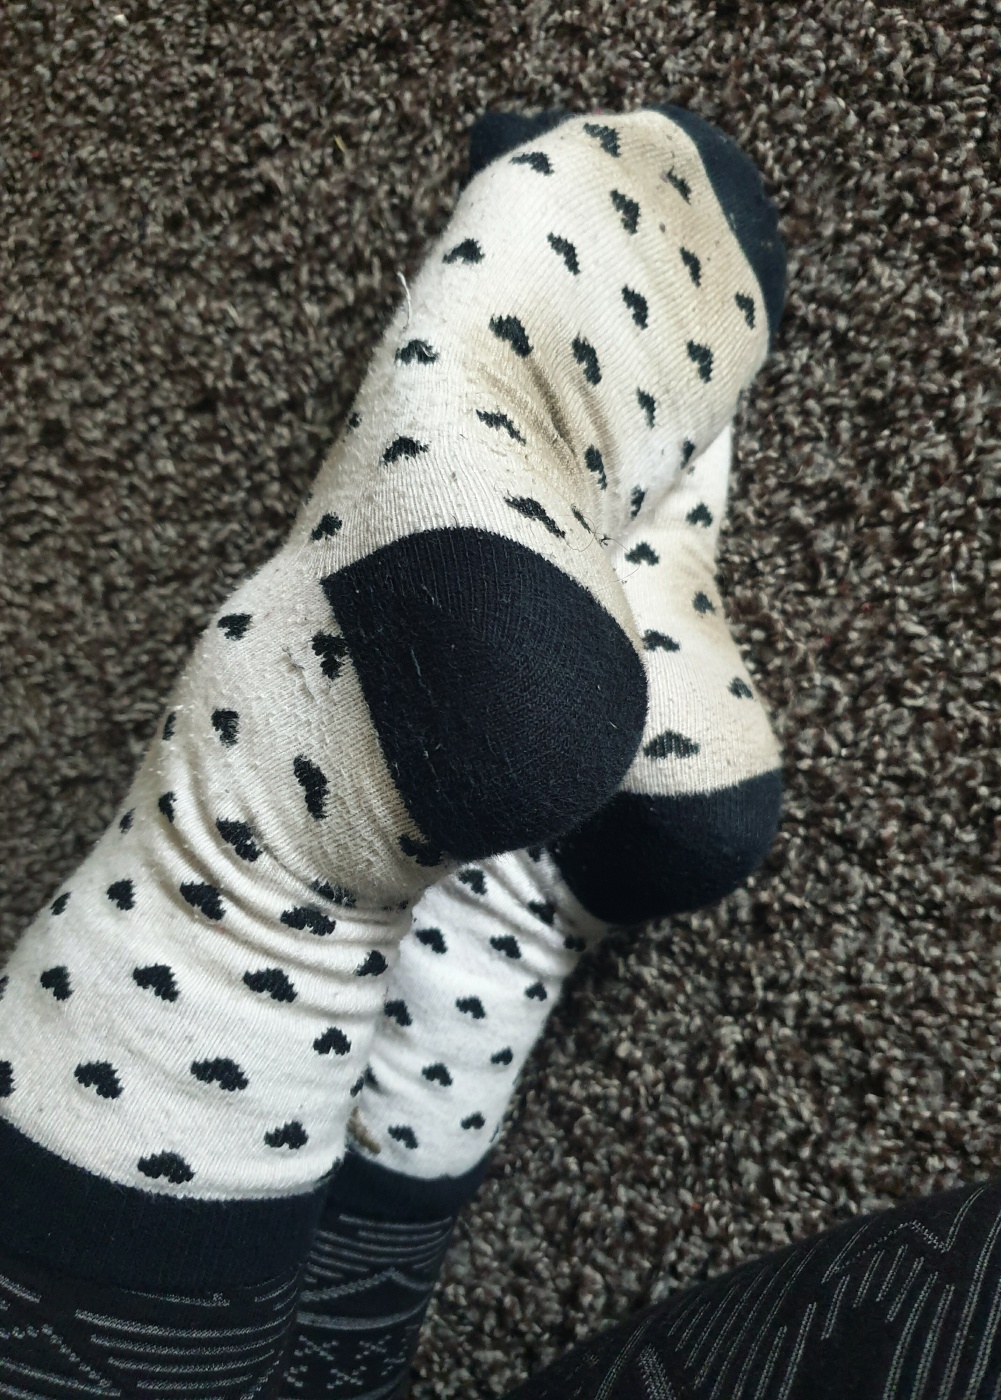 My smelly training socks